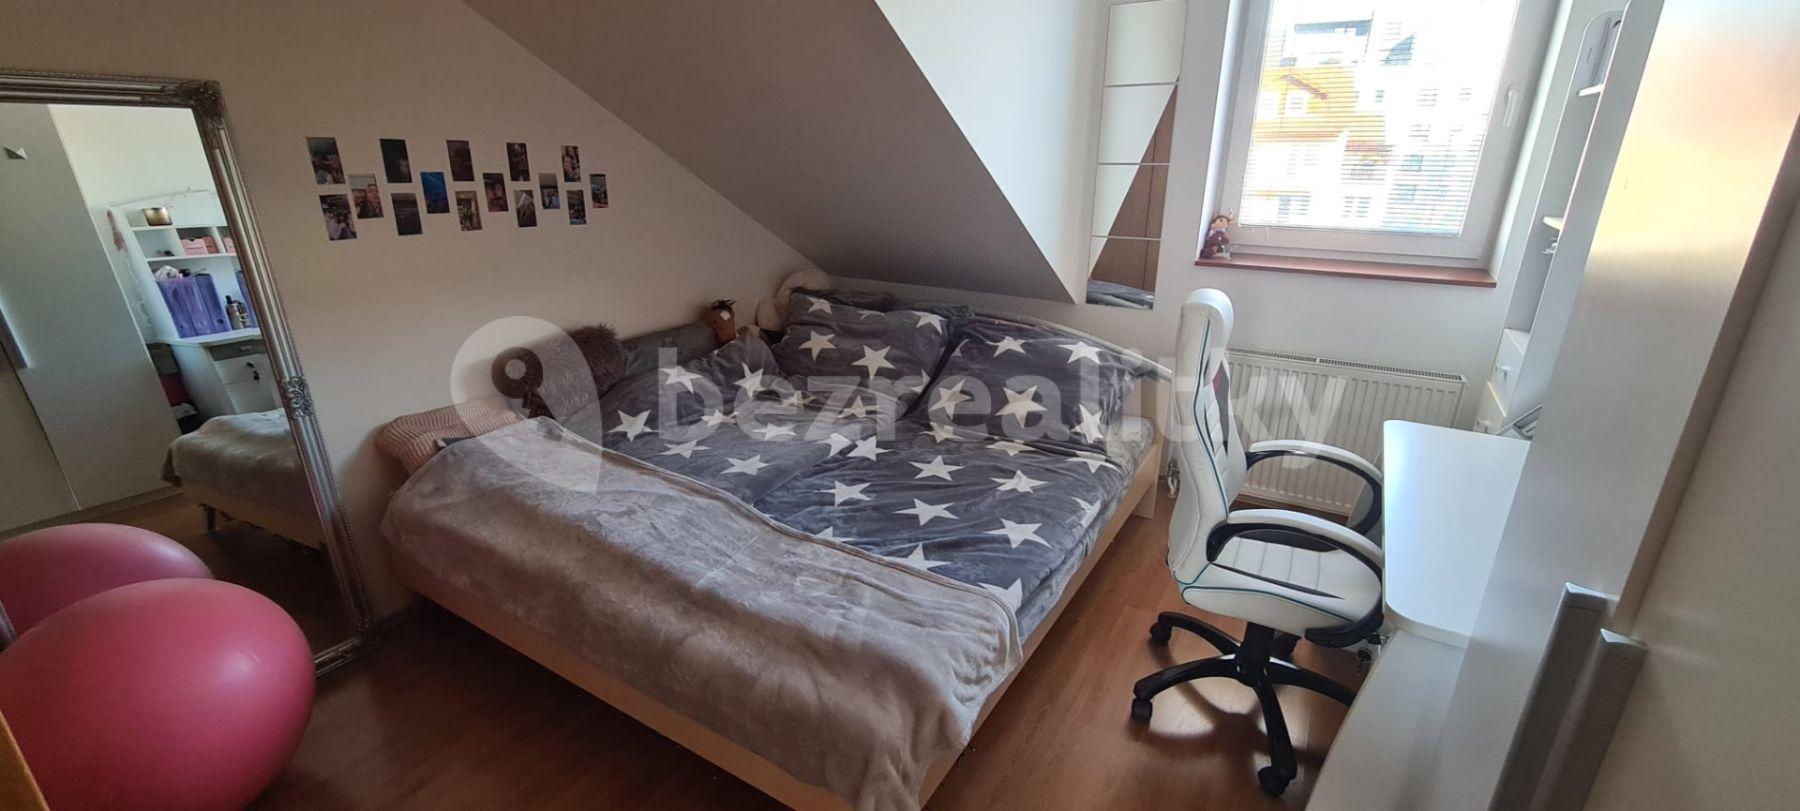 3 bedroom with open-plan kitchen flat to rent, 126 m², Metelkova, Kuřim, Jihomoravský Region